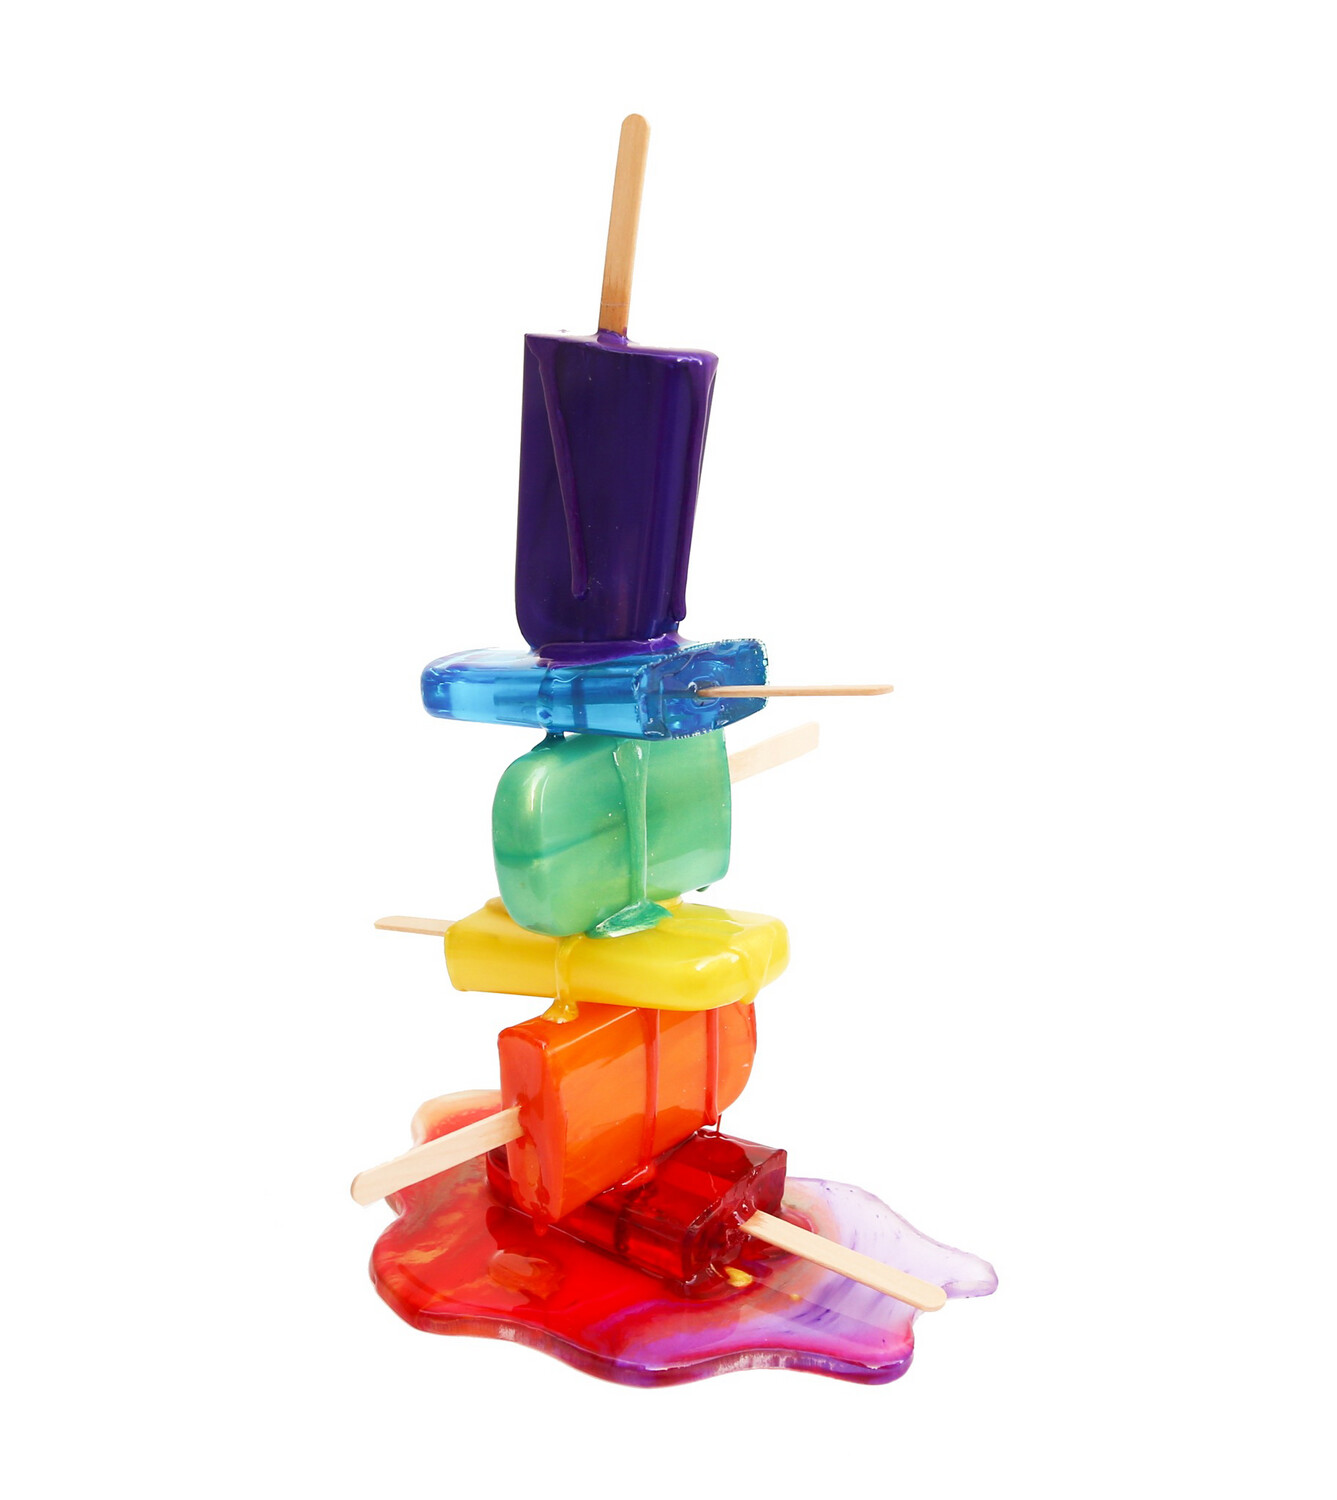 Melting Popsicle Art - Rainbow Drizzle - Original Melting Pops